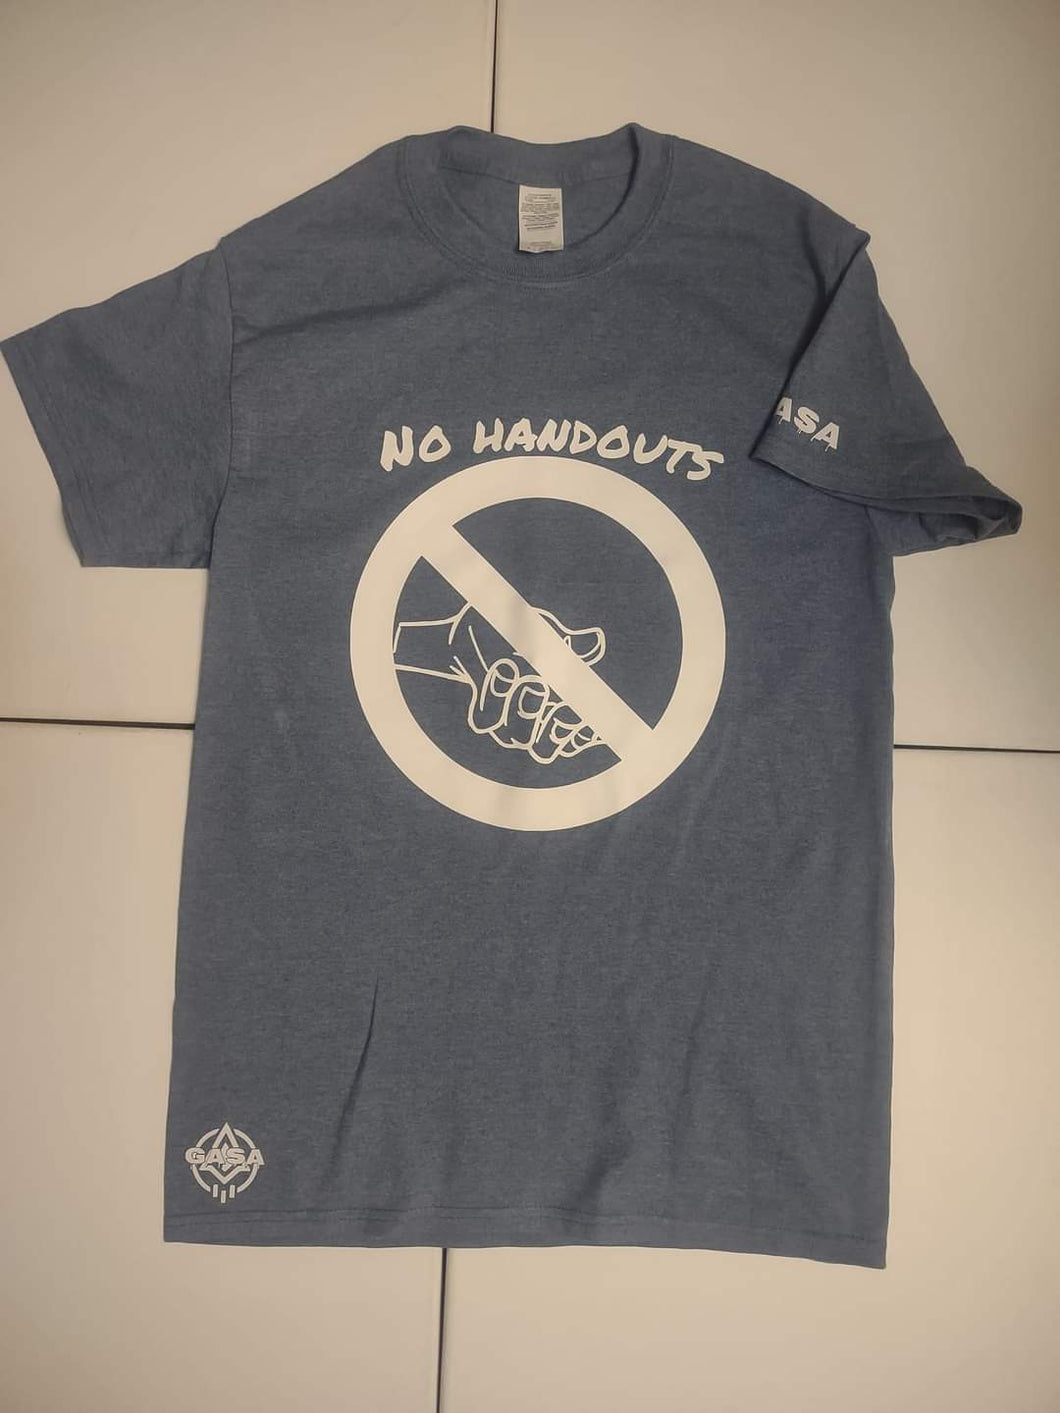 No handouts T-shirts